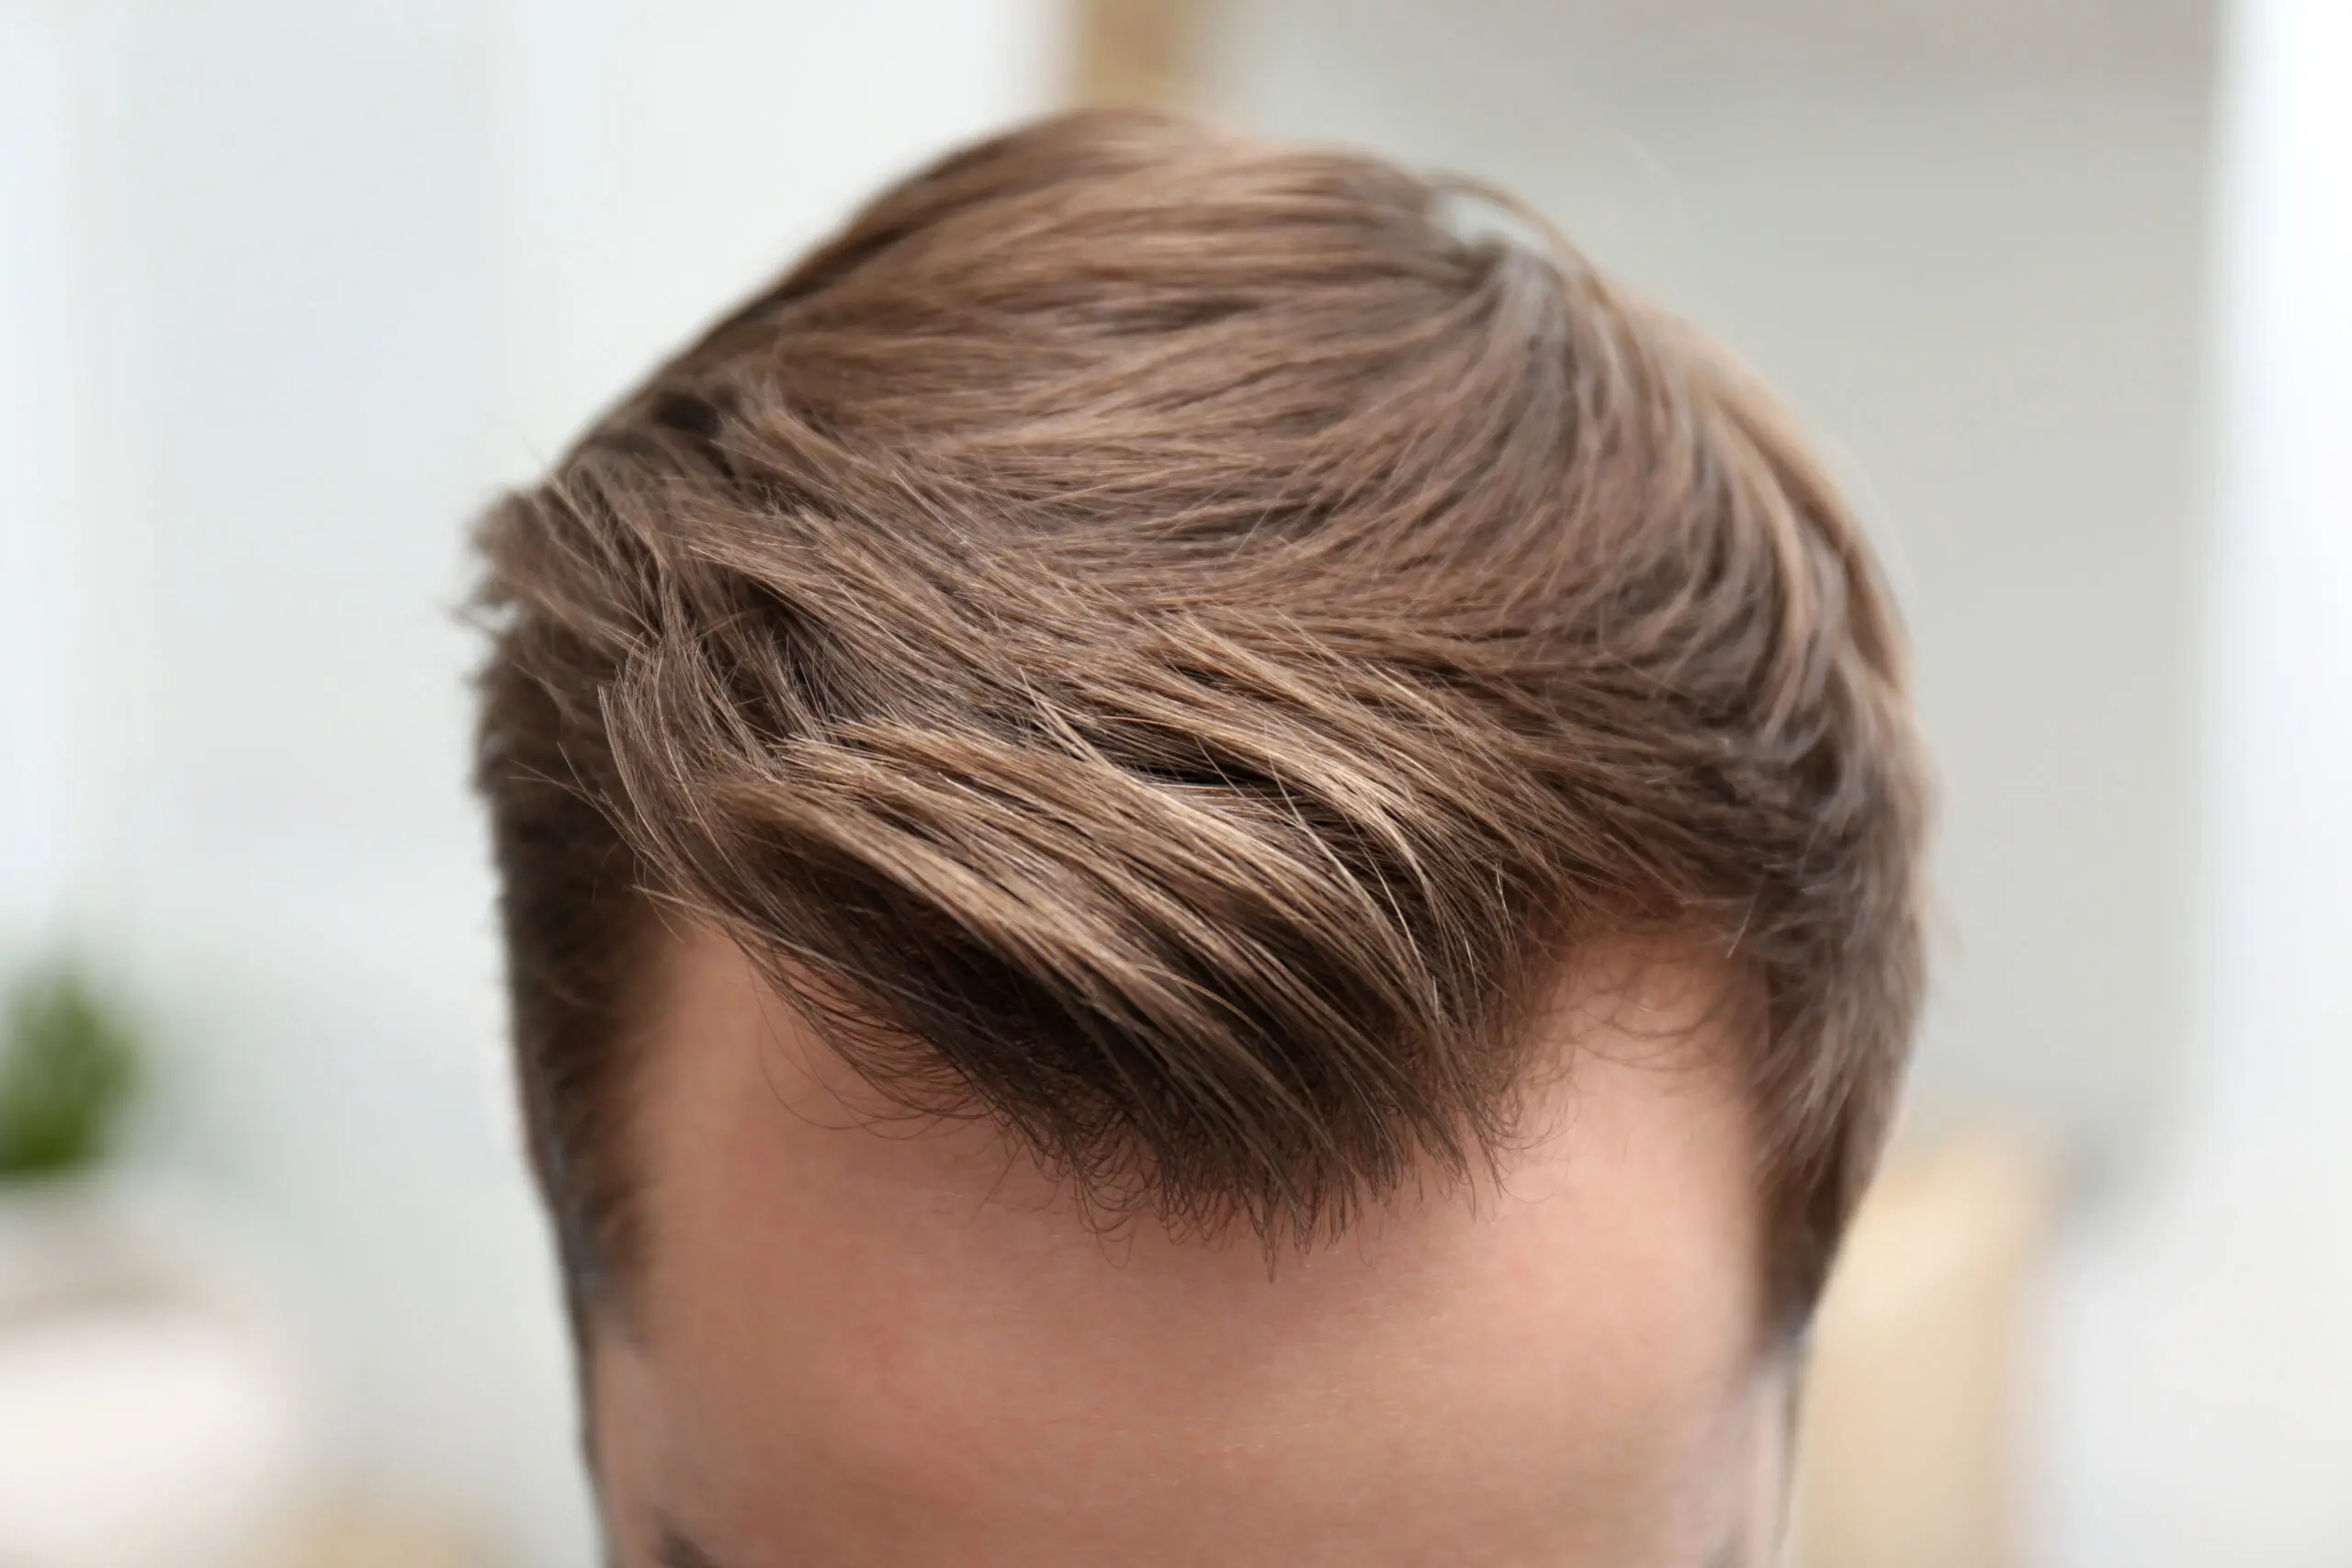 Men Haircut - @cal_newsome - +D E T A I L S+ For all education bookings and  enquiries please contact me via DM or email📩 #menshair #skinfade  #barbershopconnect #ukbarber #menshair #calnewsome #